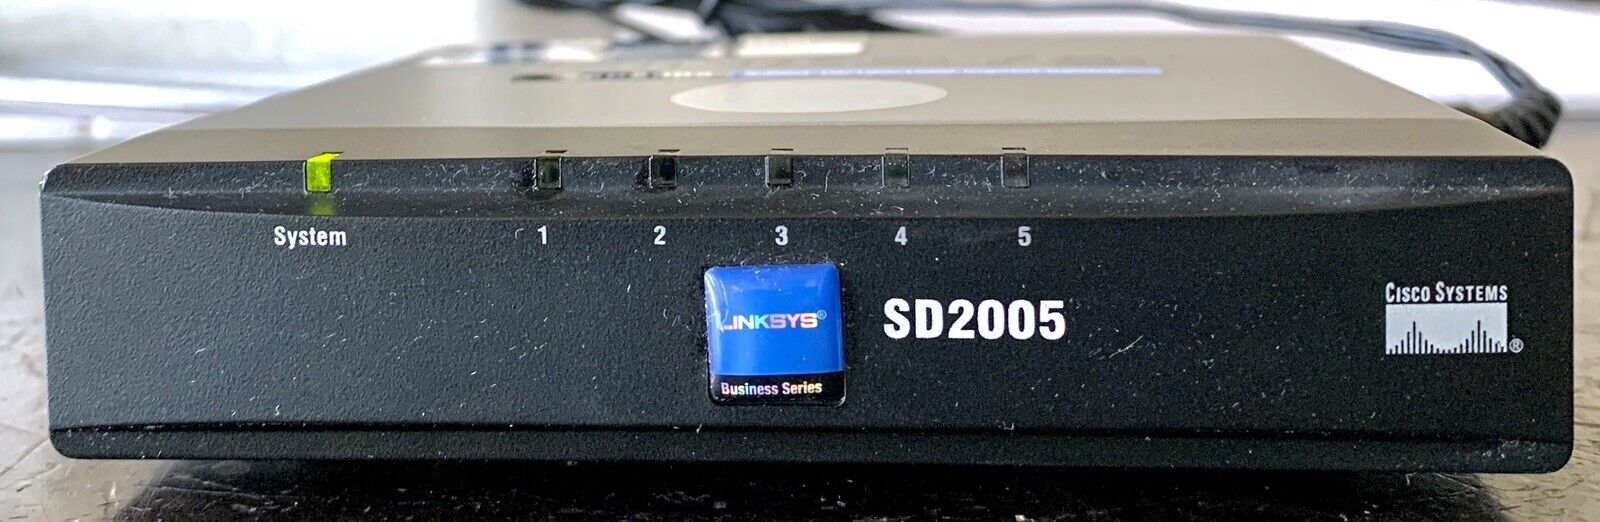 Linksys SD2005 5-Port 10/100/1000 Gigibit Smart Switch 1000 Mbps